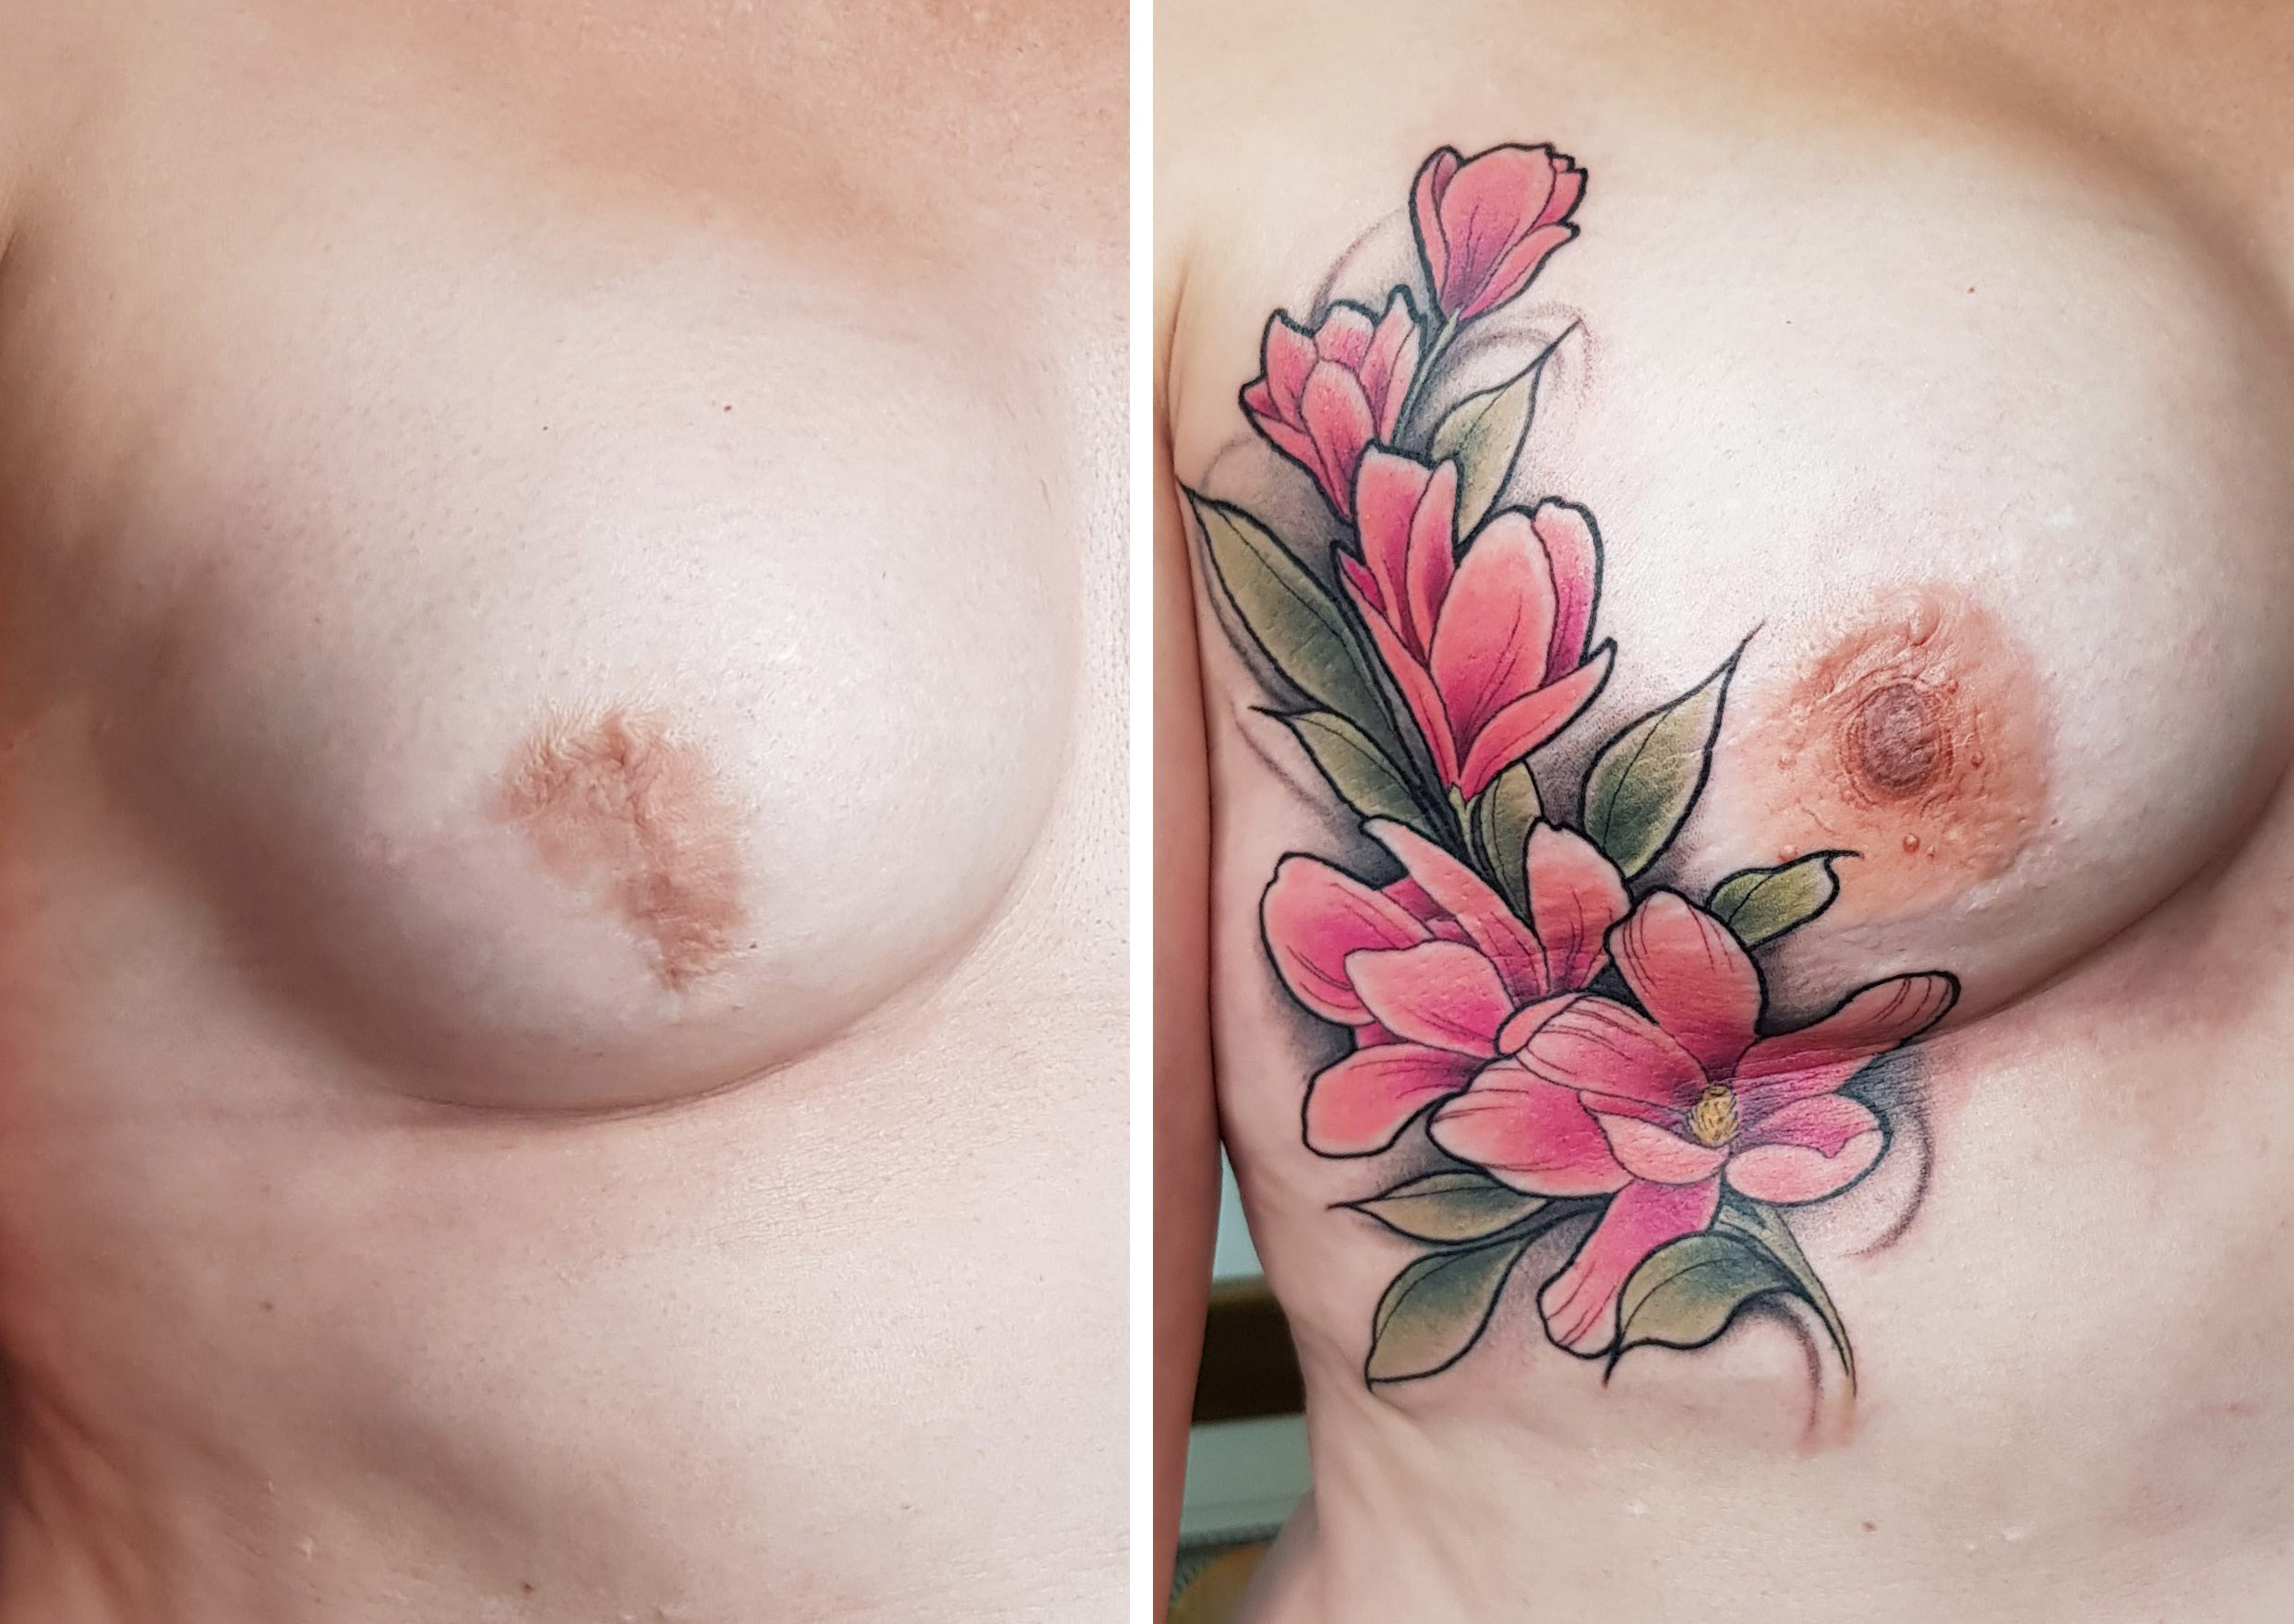 3D Realistic Nipple Tattoo and Tattoo design, post mastectomy, breast cancer survivor.